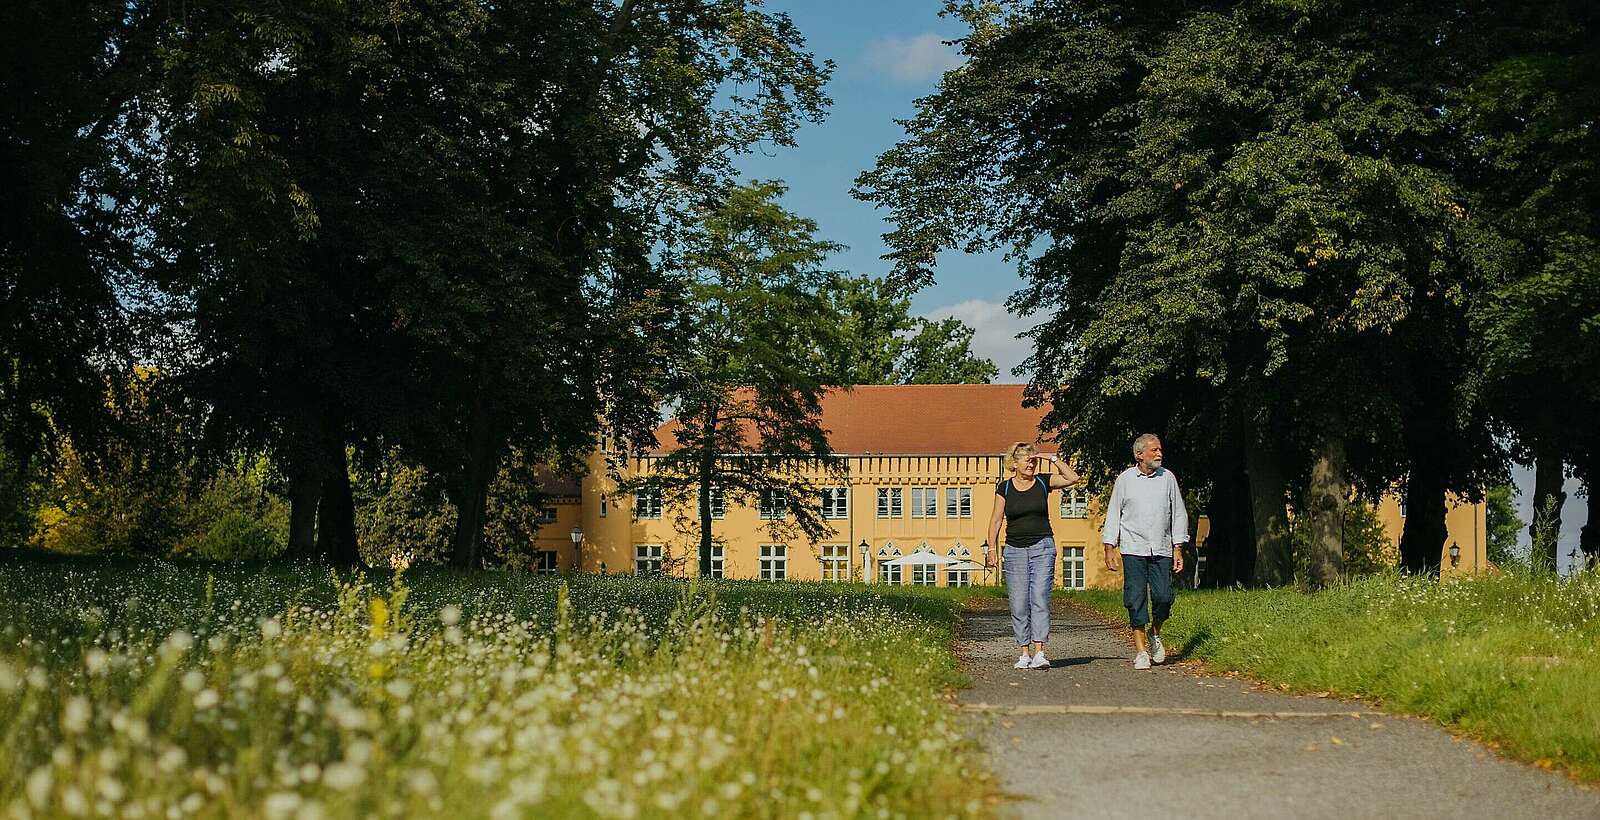 Spaziergang im Schlosspark Petzow,
        
    

        Foto: Fotograf / Lizenz - Media Import/Julia Nimke